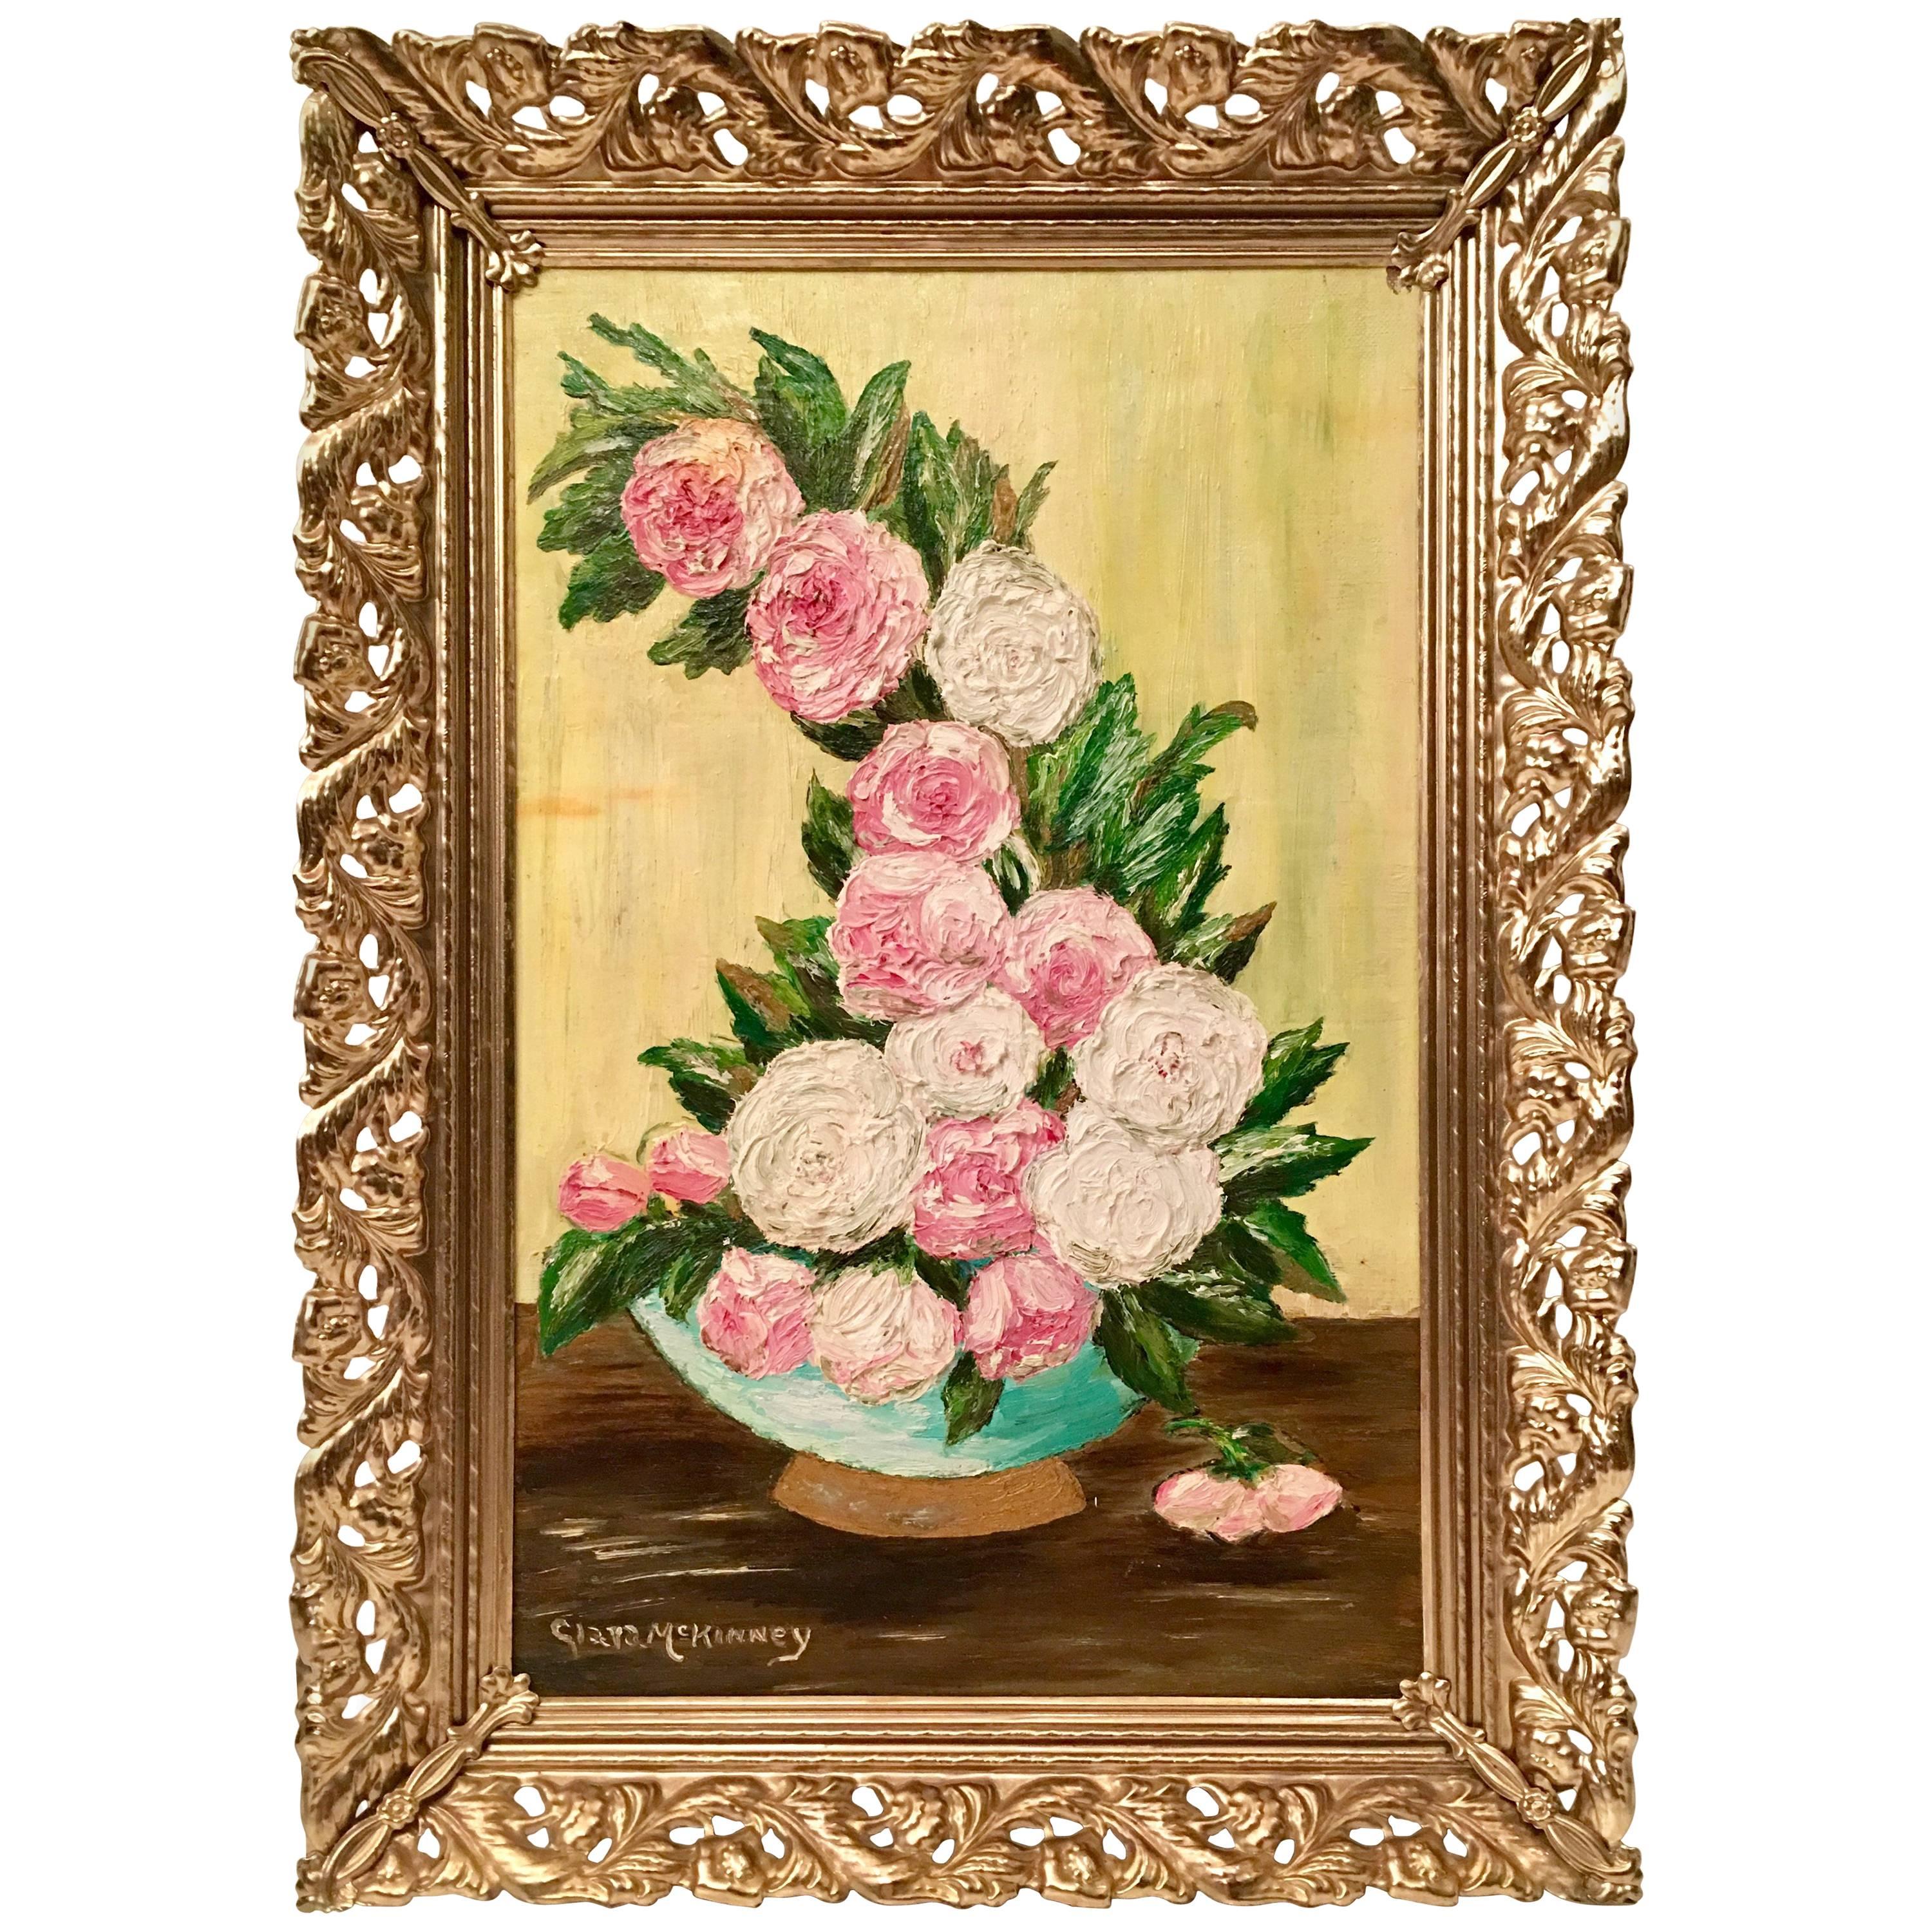 20th Century Original Oil On Canvas Still Life Flower Painting By Clara McKinney For Sale